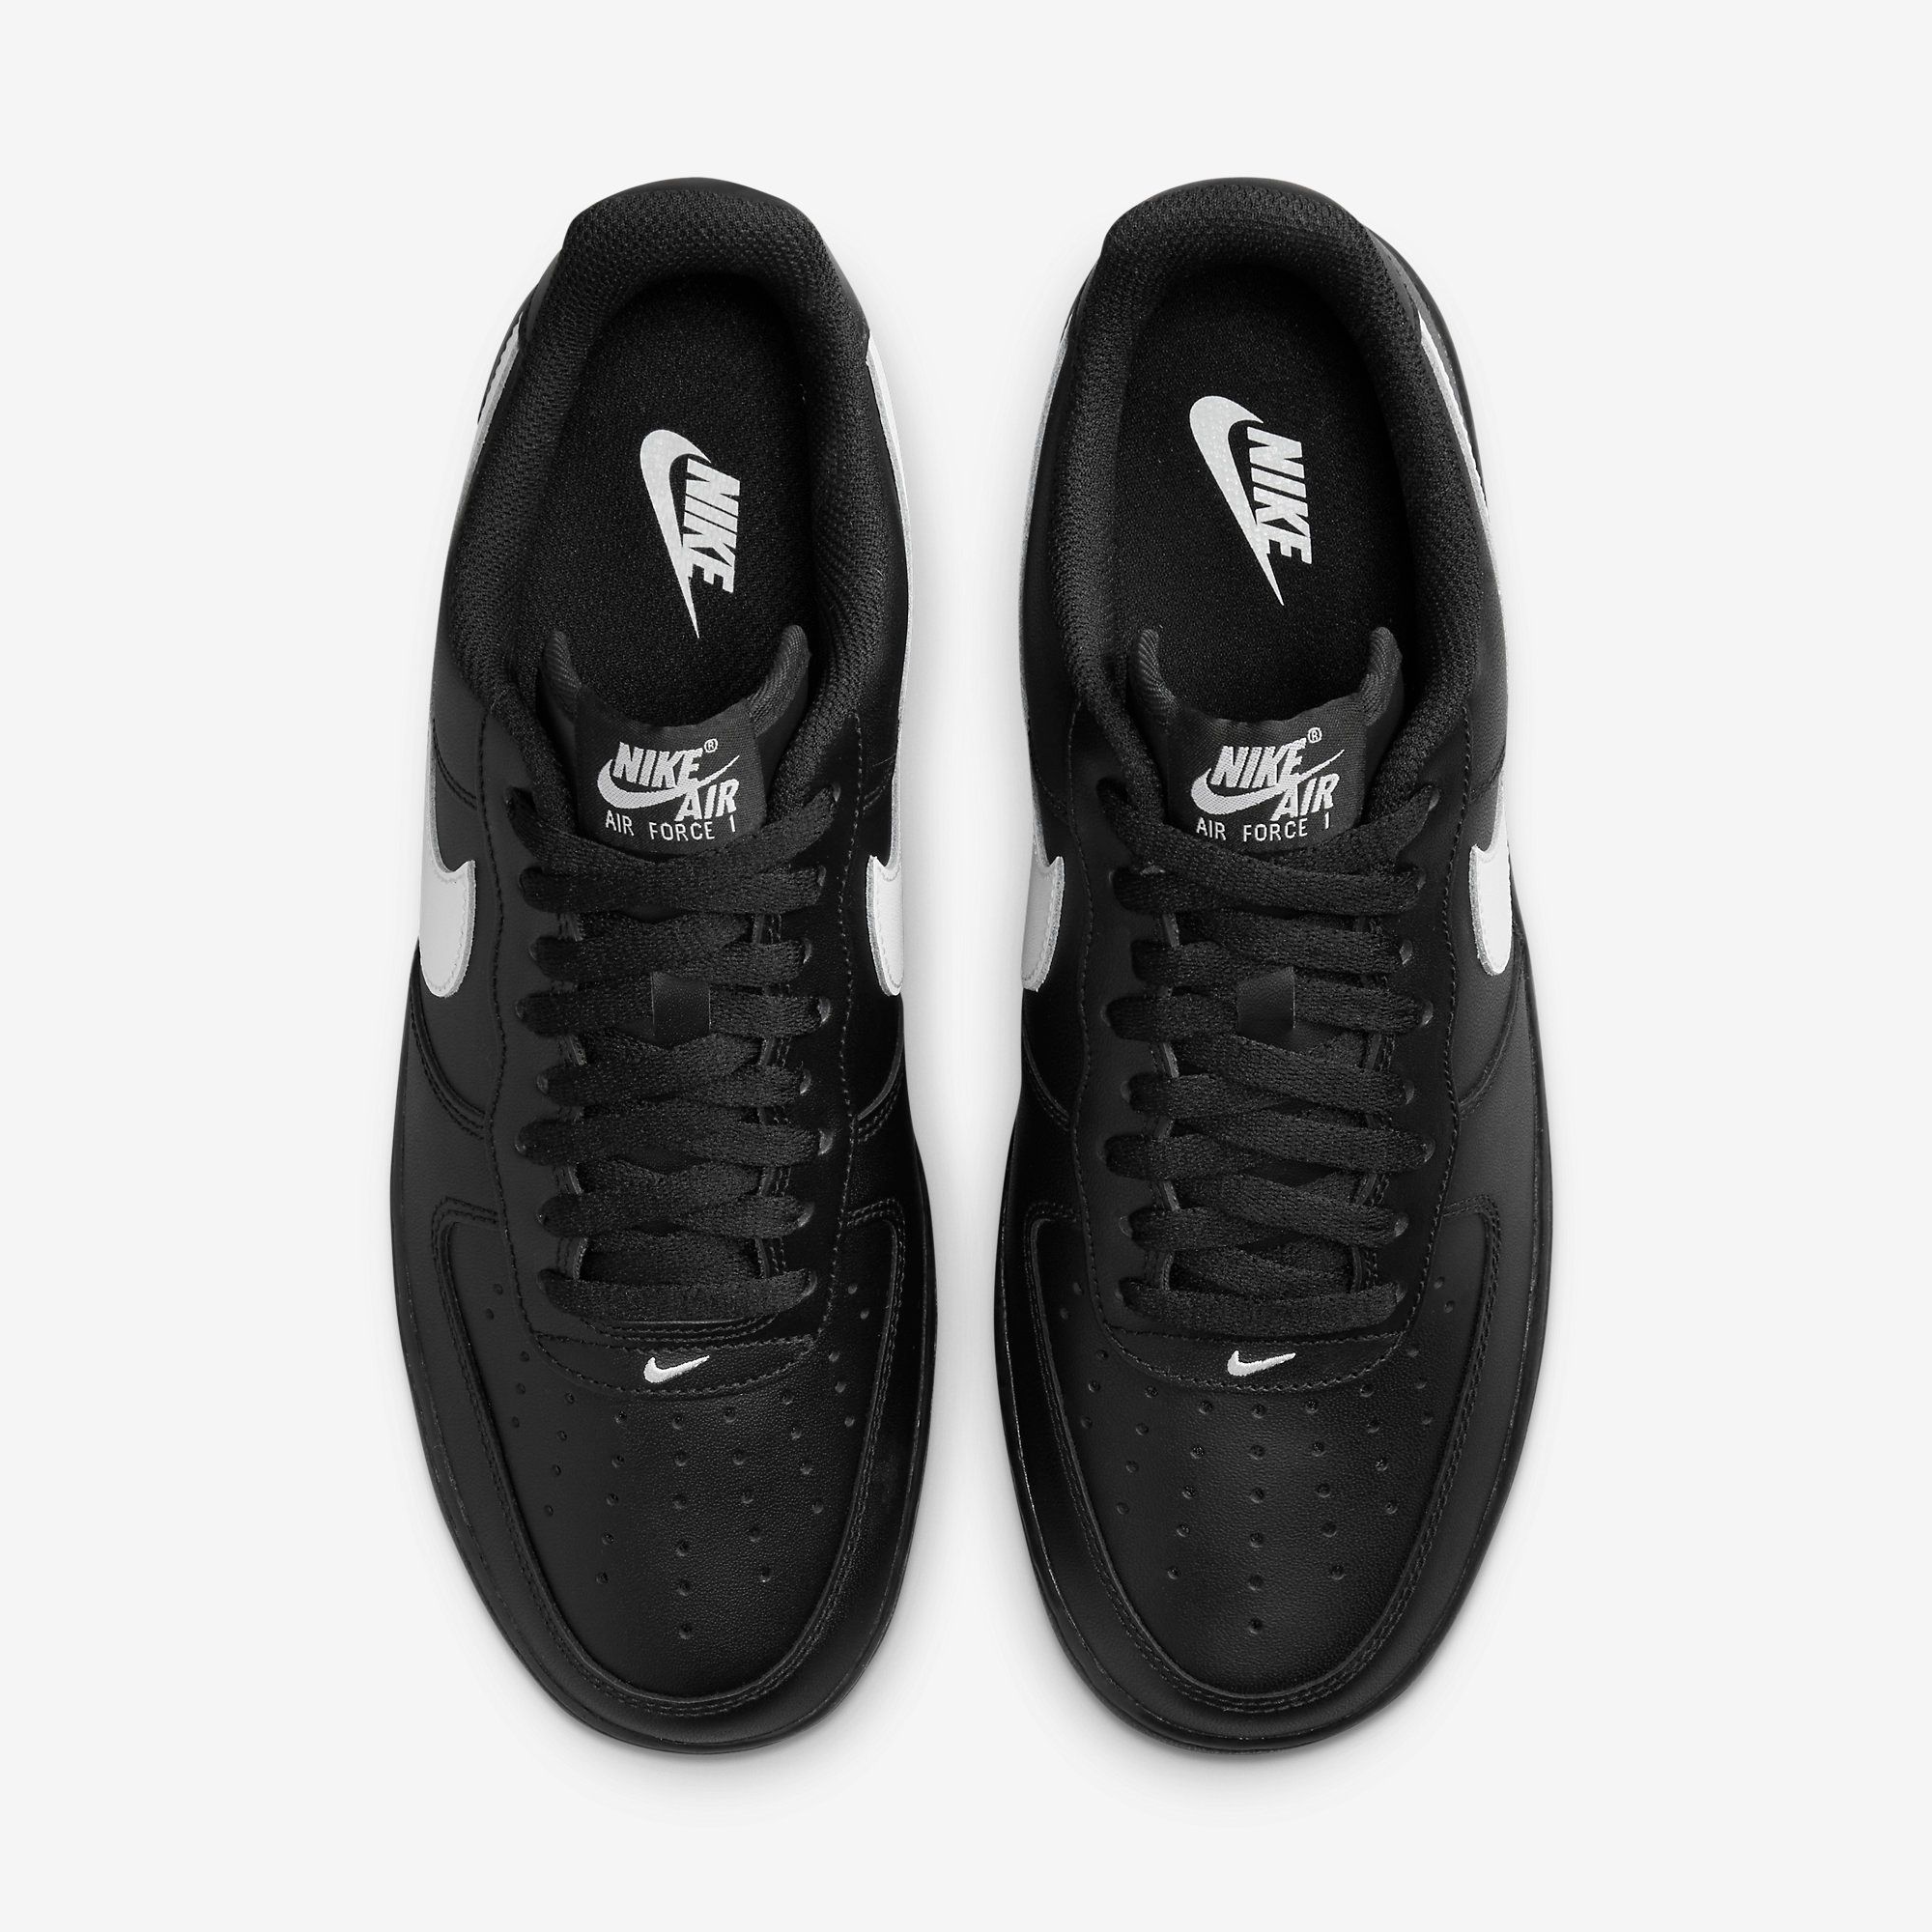  Nike Air Force 1 '07 - Black / White 